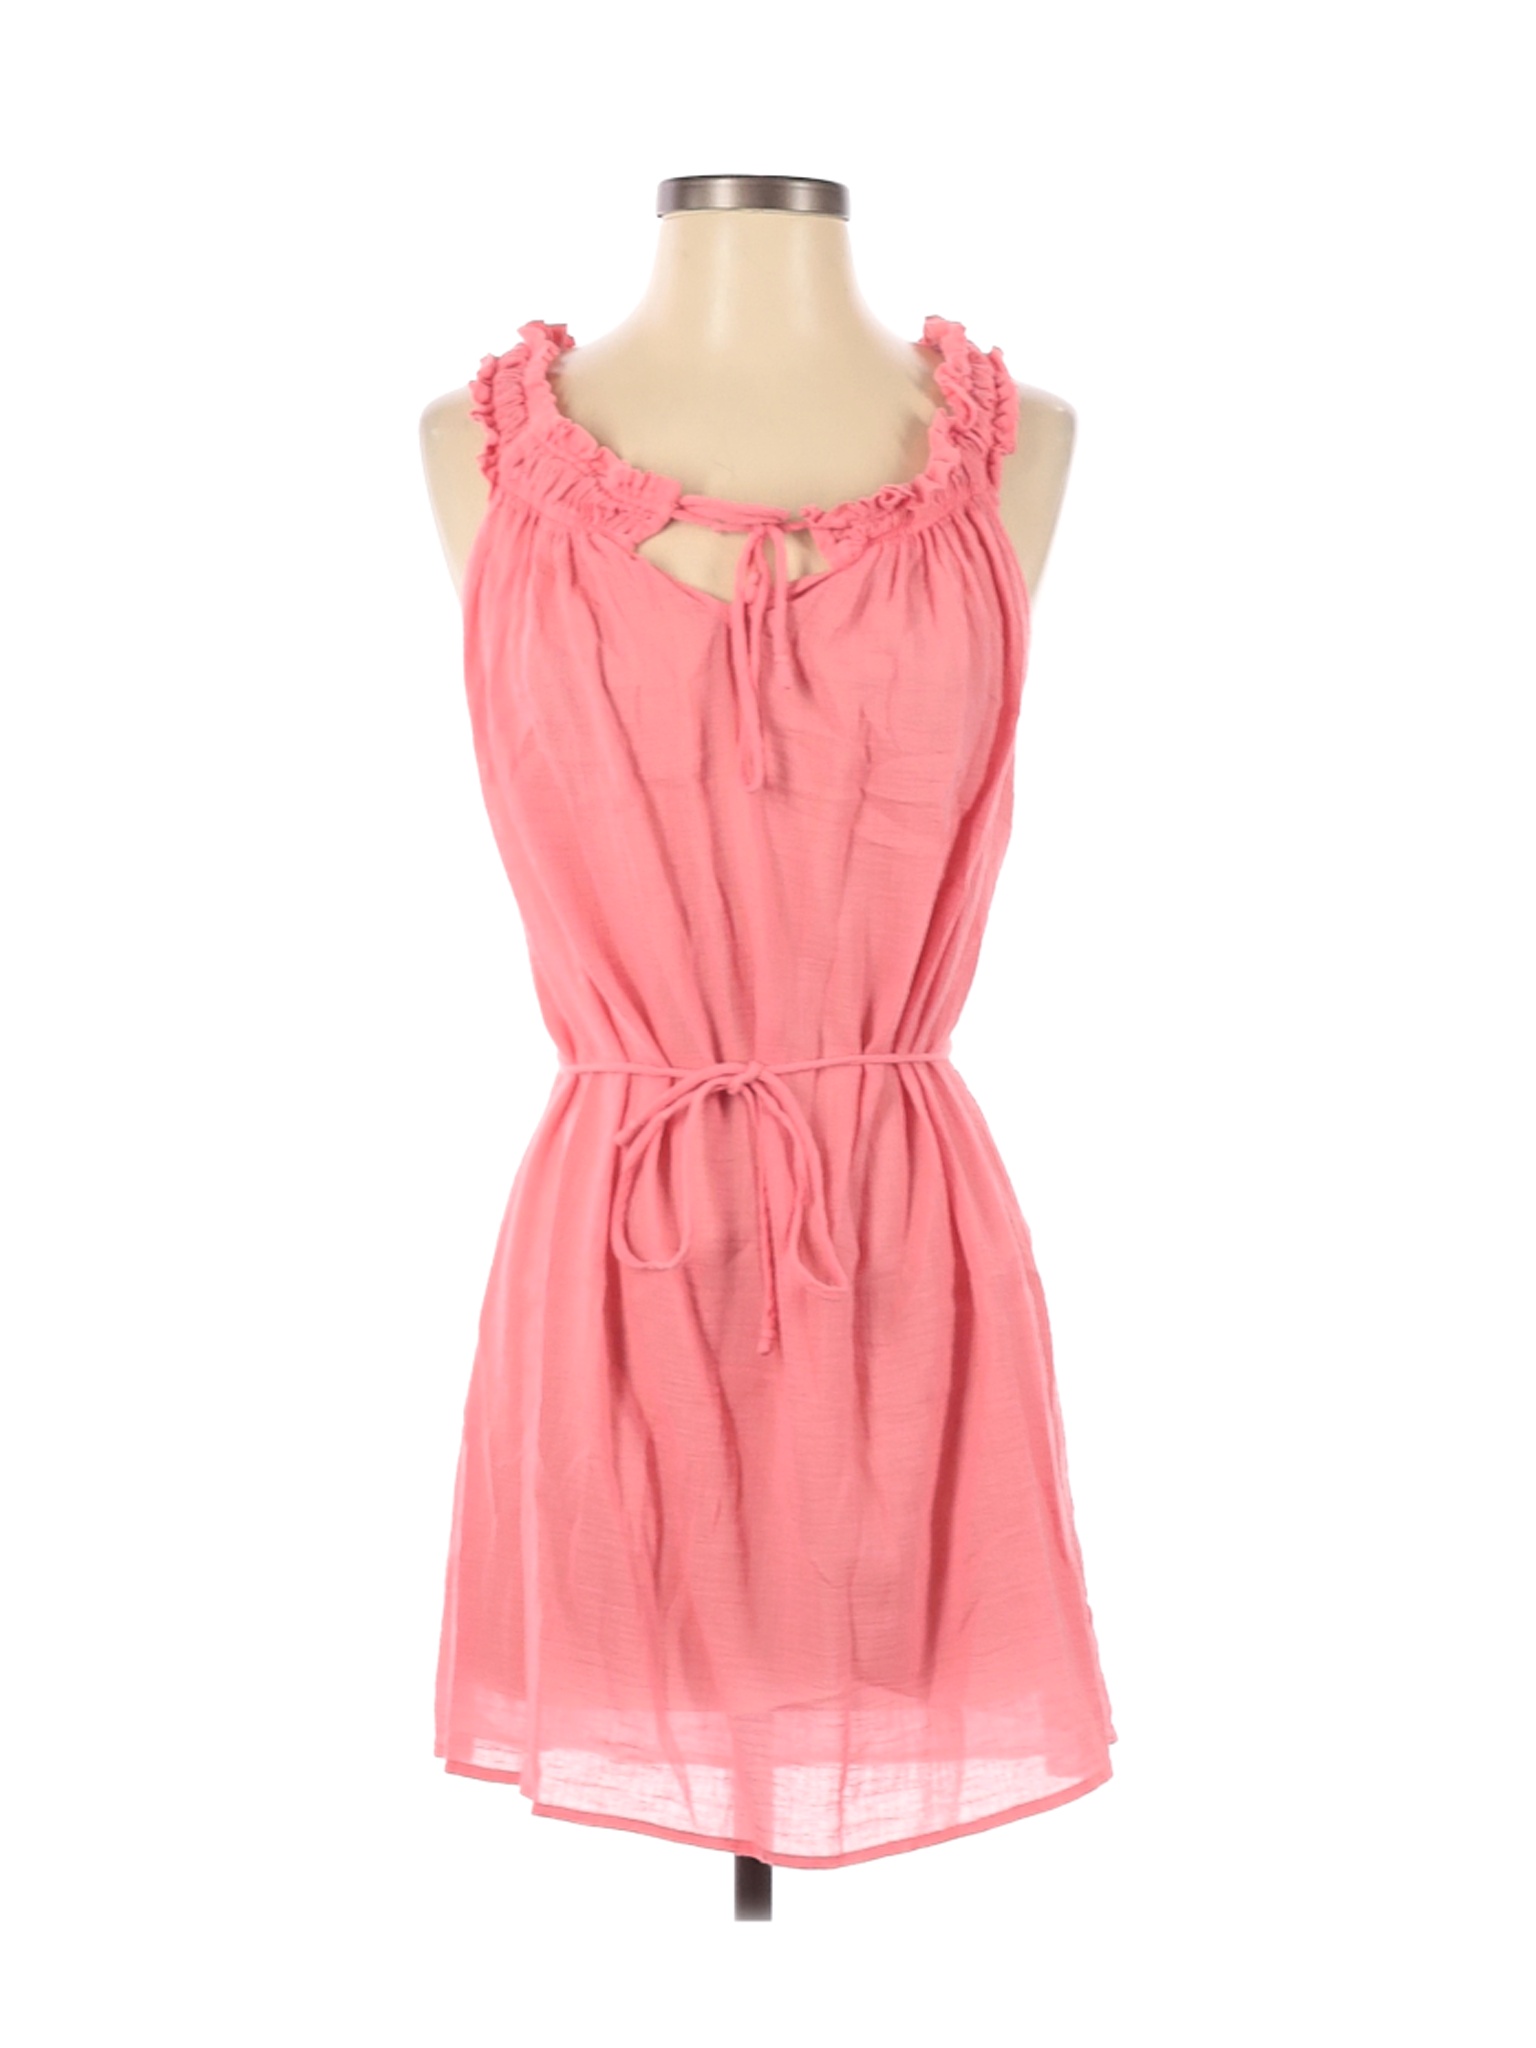 J.Crew Women Pink Casual Dress S | eBay